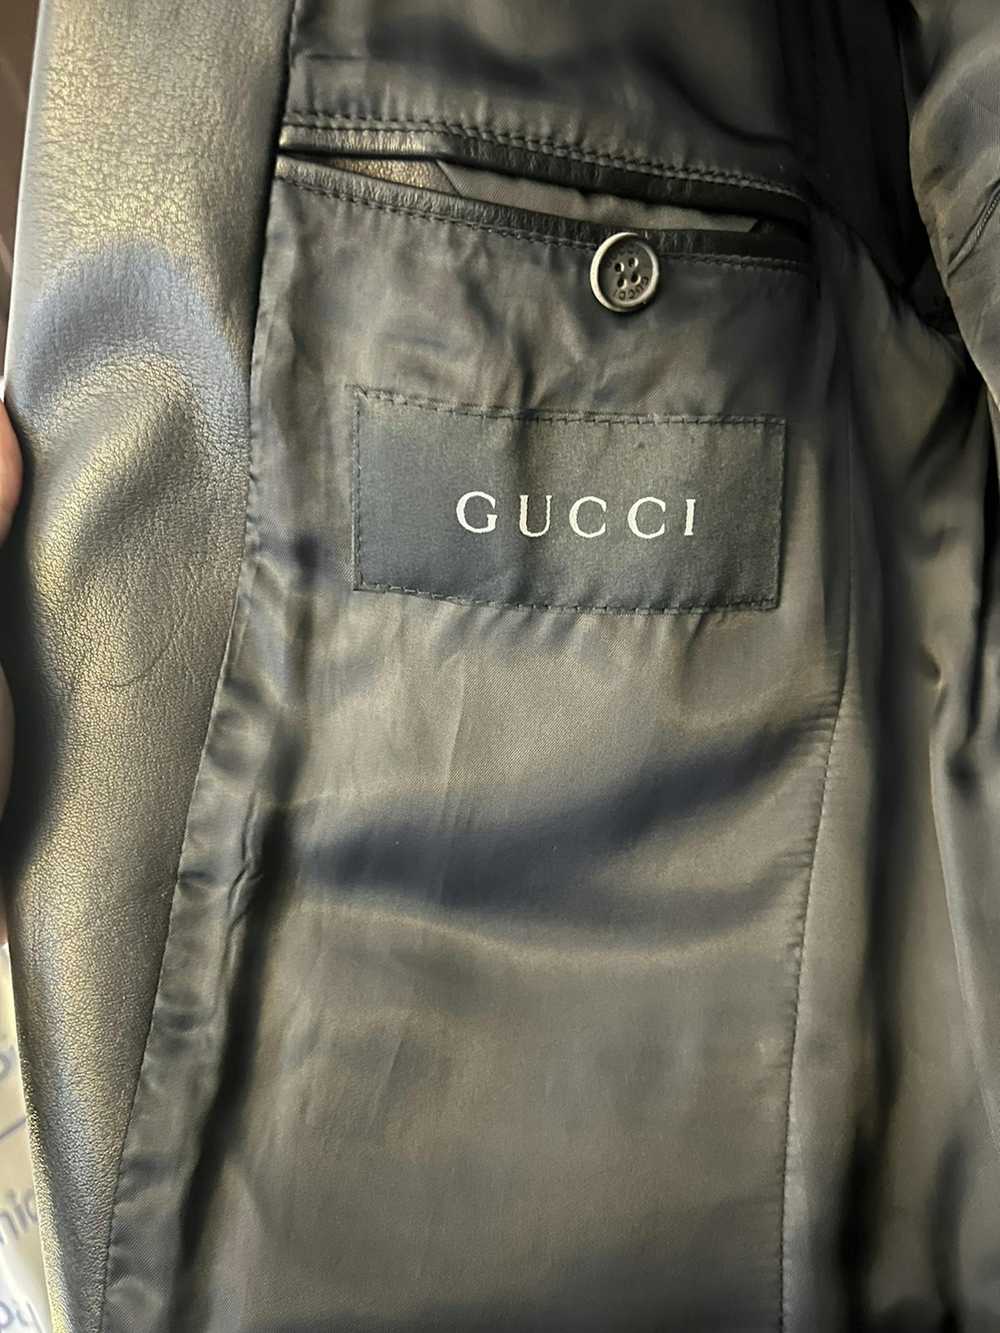 Gucci Gucci Tom Ford leather Blazer Sports coat b… - image 2